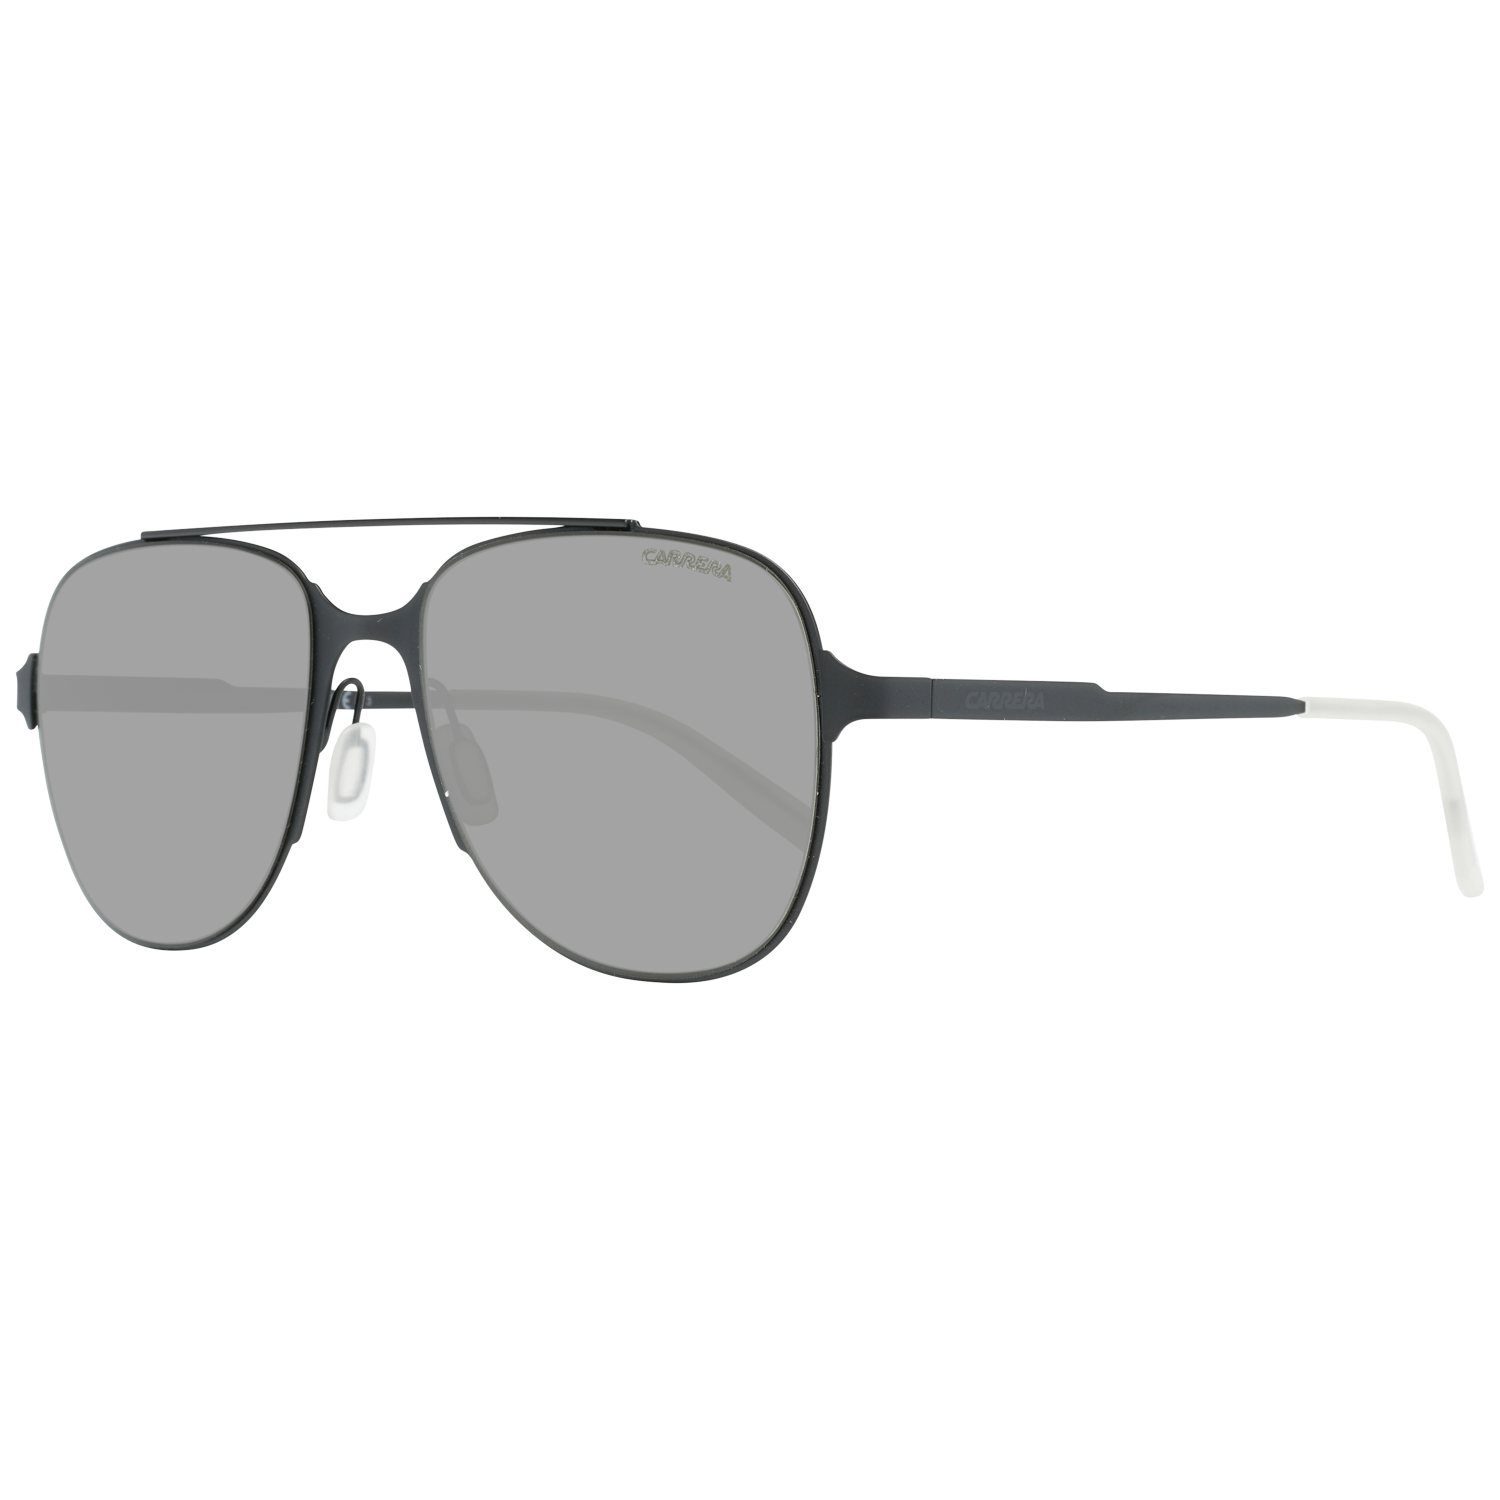 Carrera Sunglasses CA114/S 003/70 55